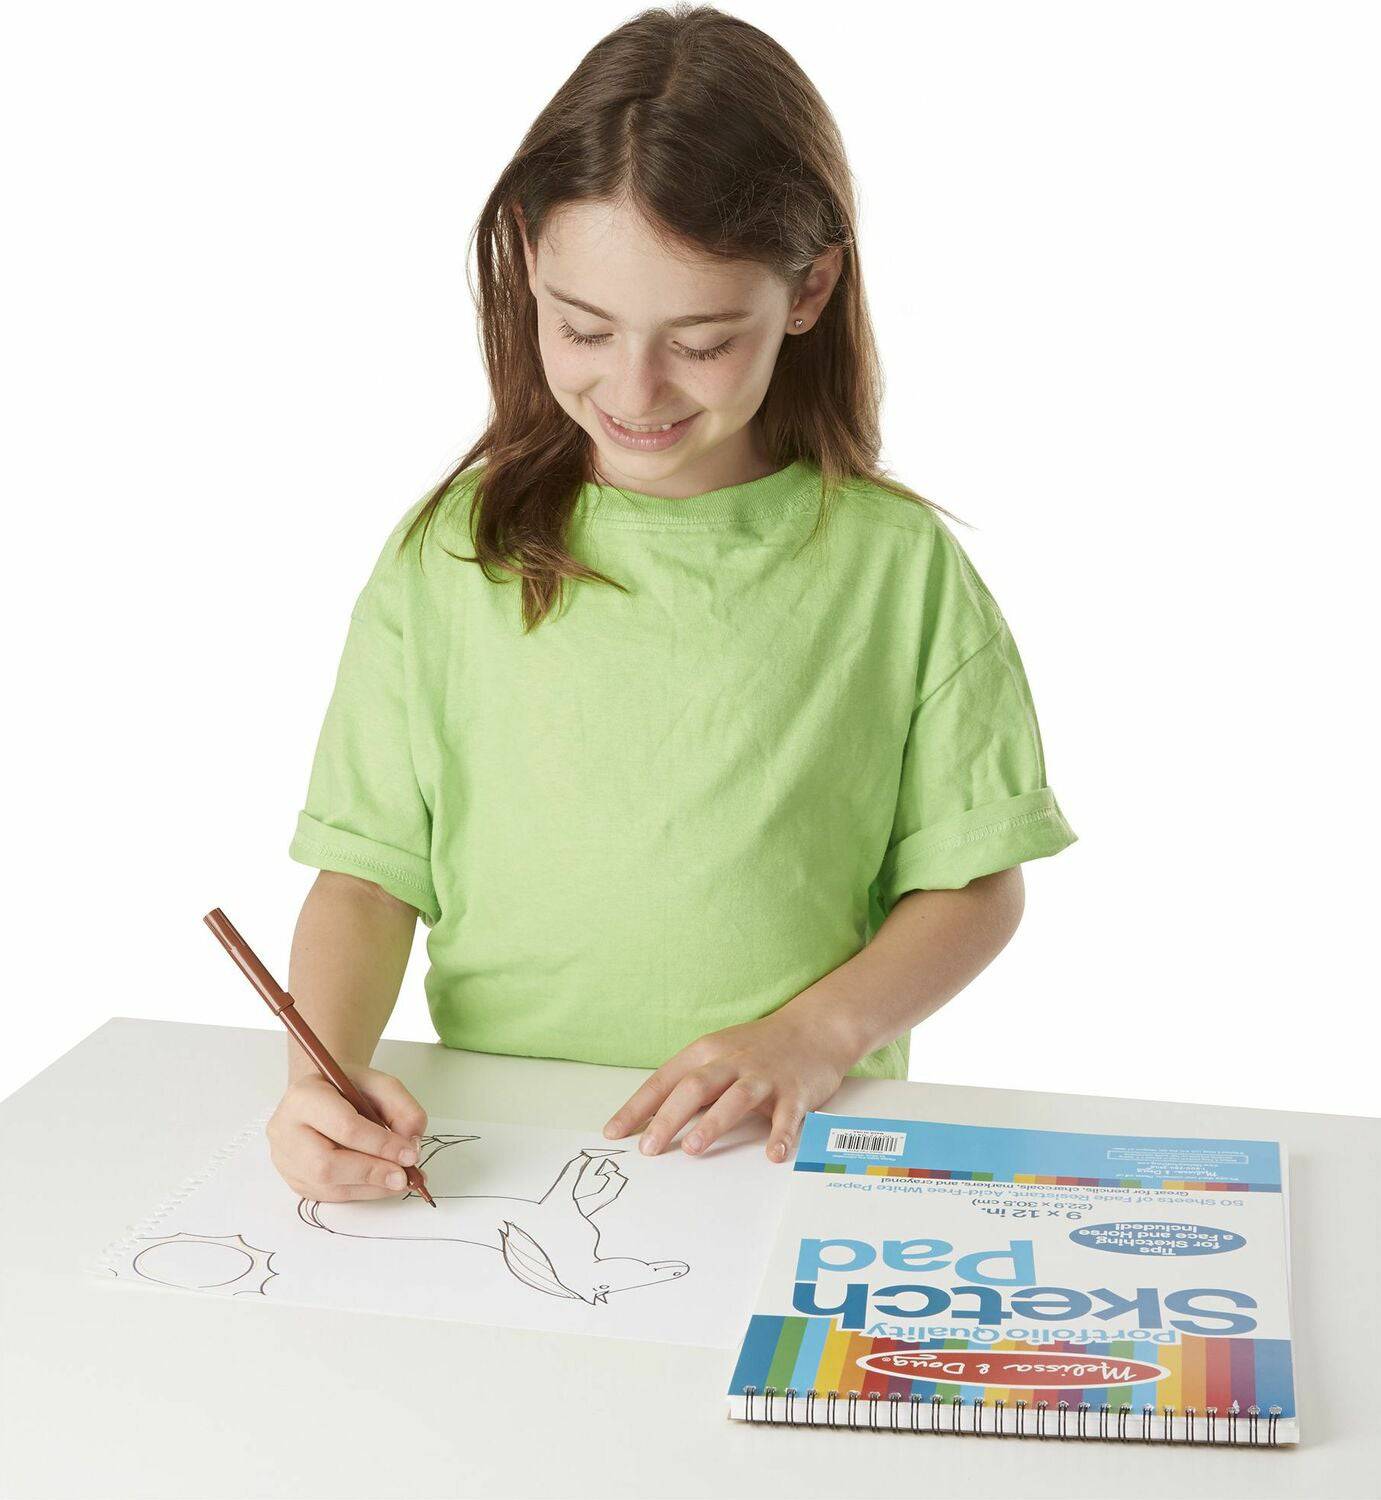 Sketch Pad - A Child's Delight